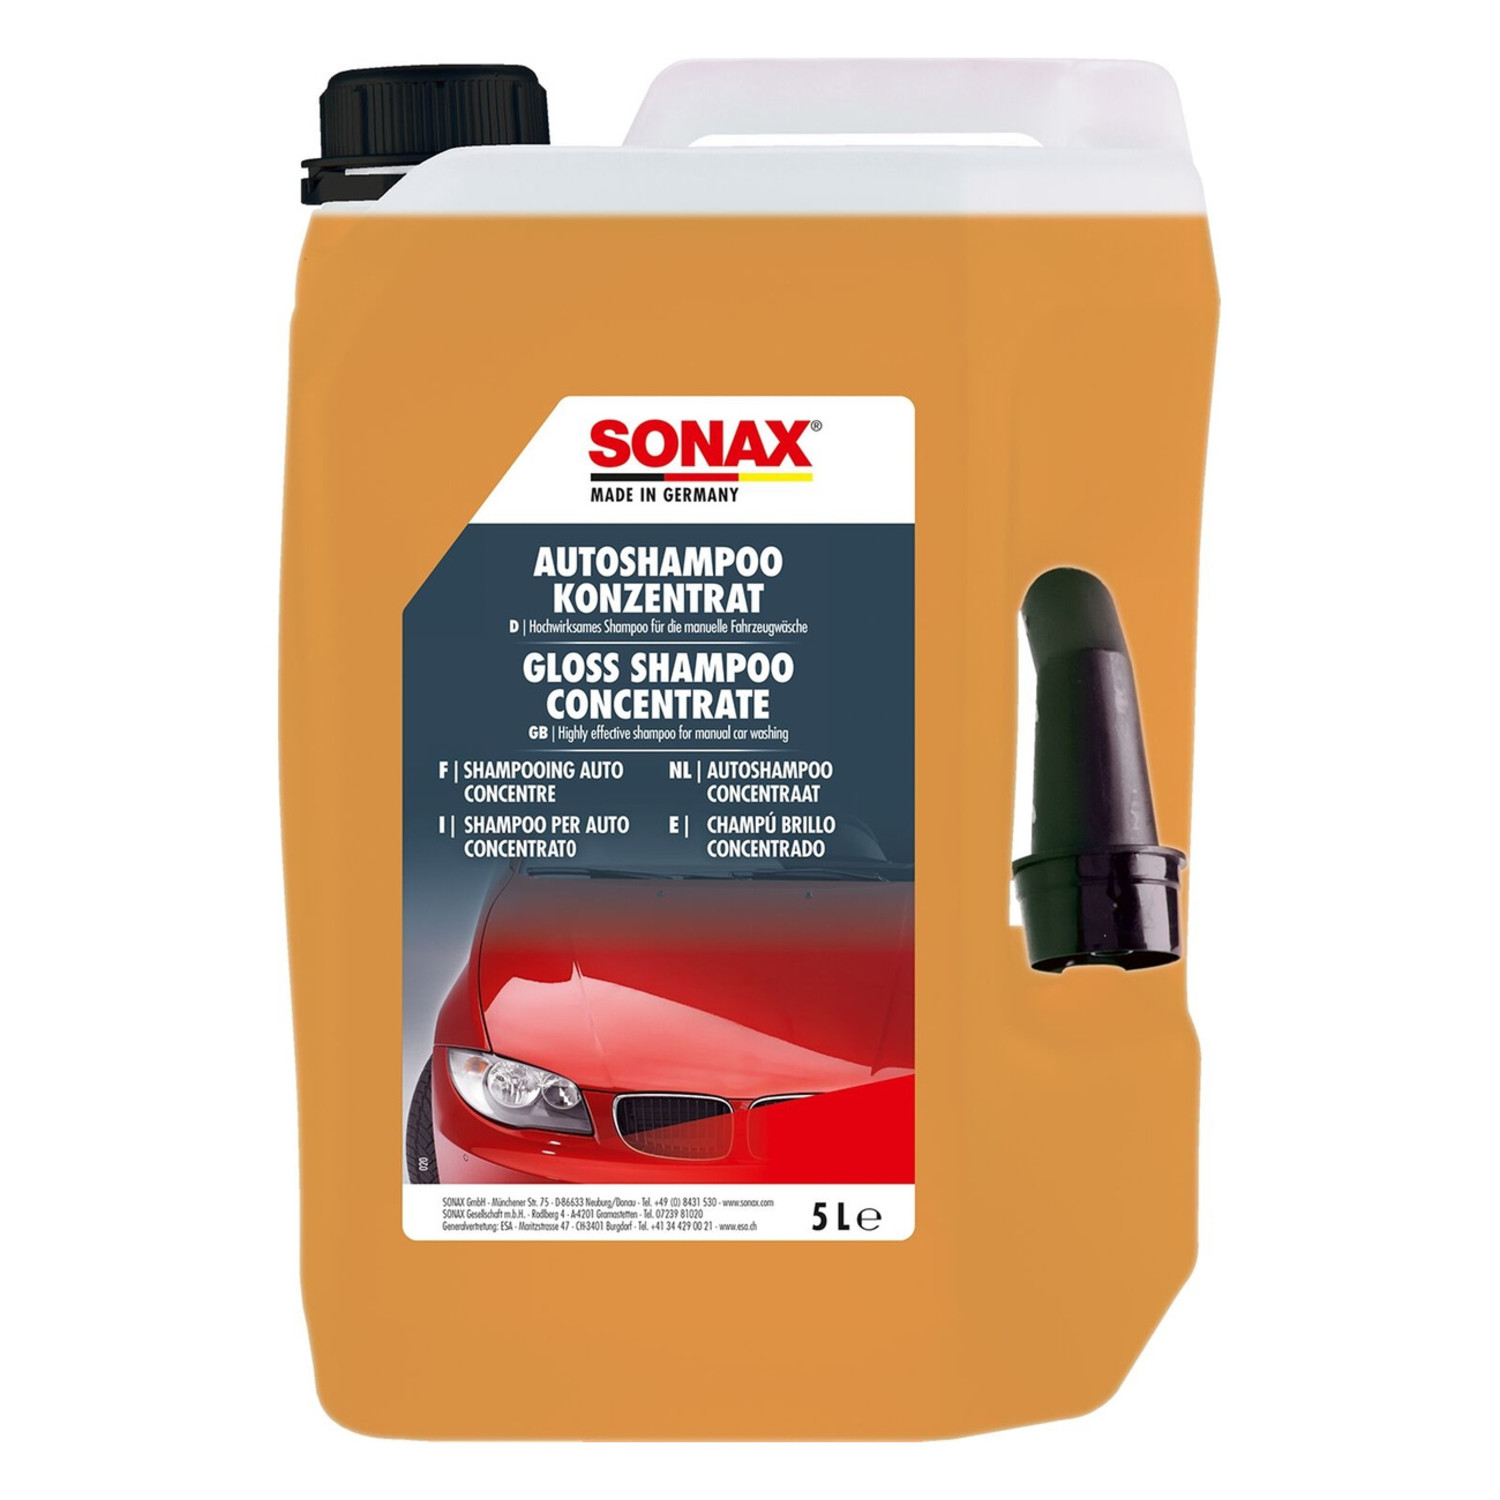 Sonax Autoshampoo Konzentrat 5 Liter - Car Care King